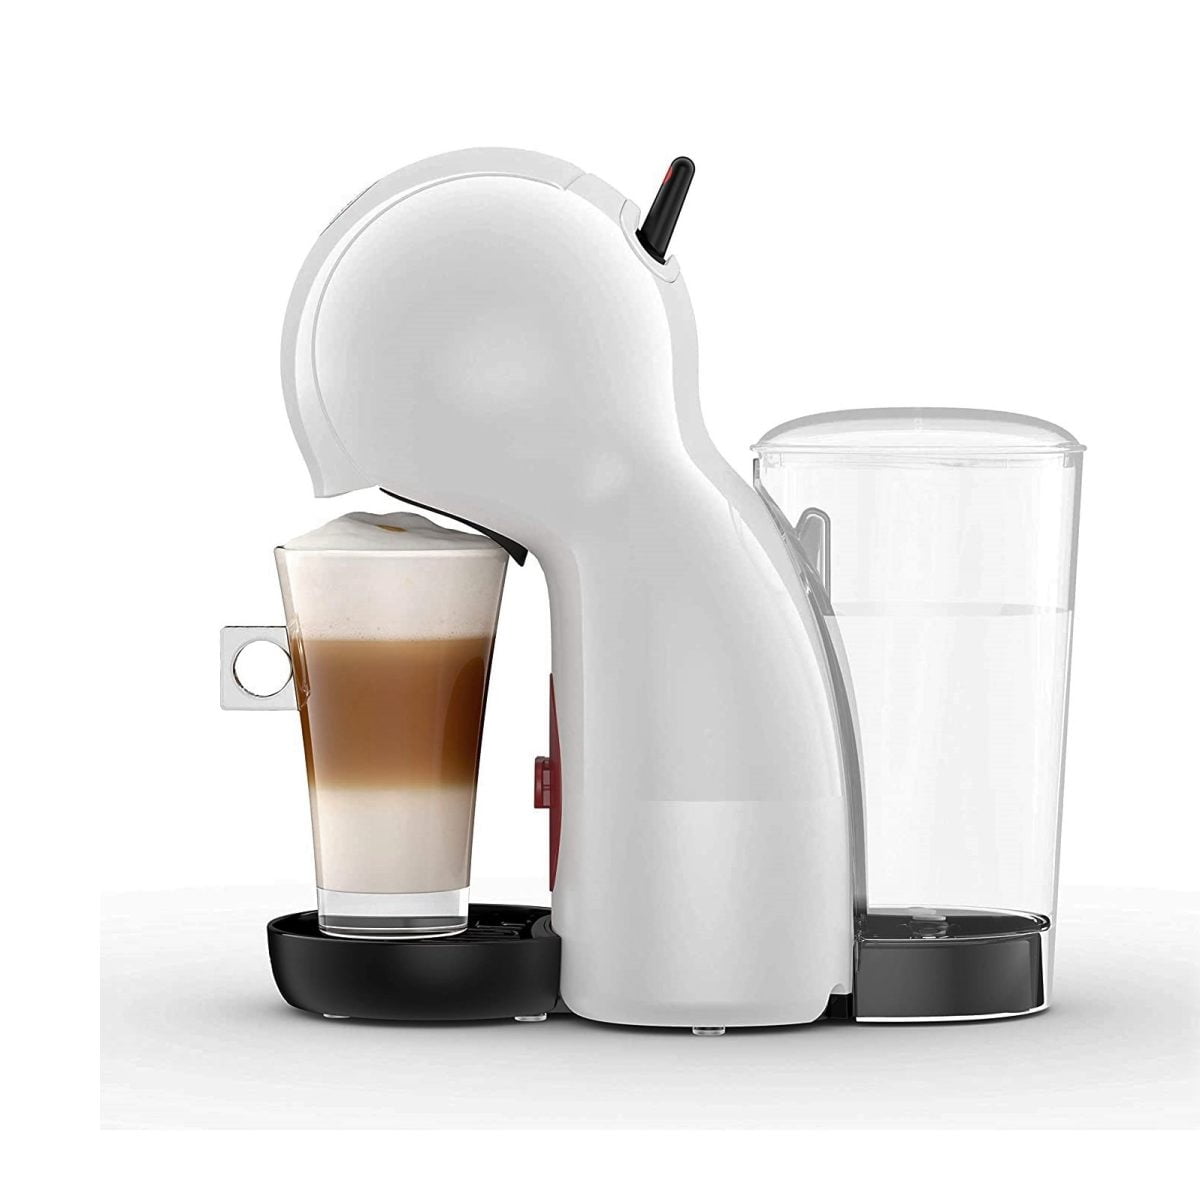 Nescafe Dolce Gusto Piccolo Xs Manual Coffee Machine – White Krups Kp1A0140